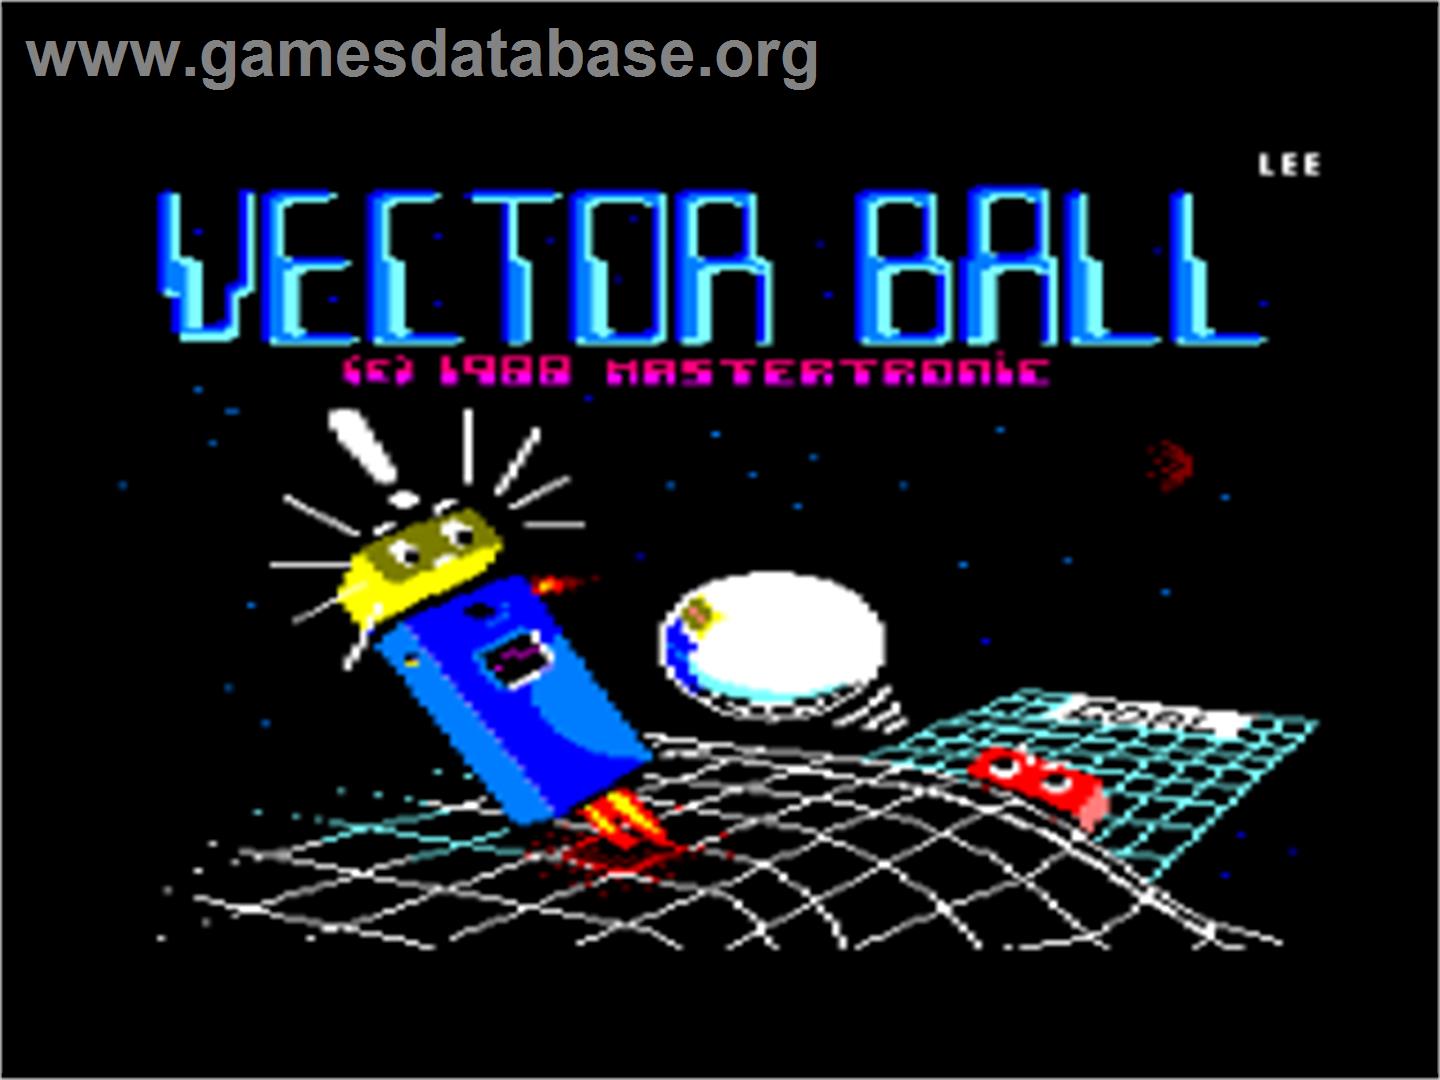 Vector Ball - Amstrad CPC - Artwork - Title Screen